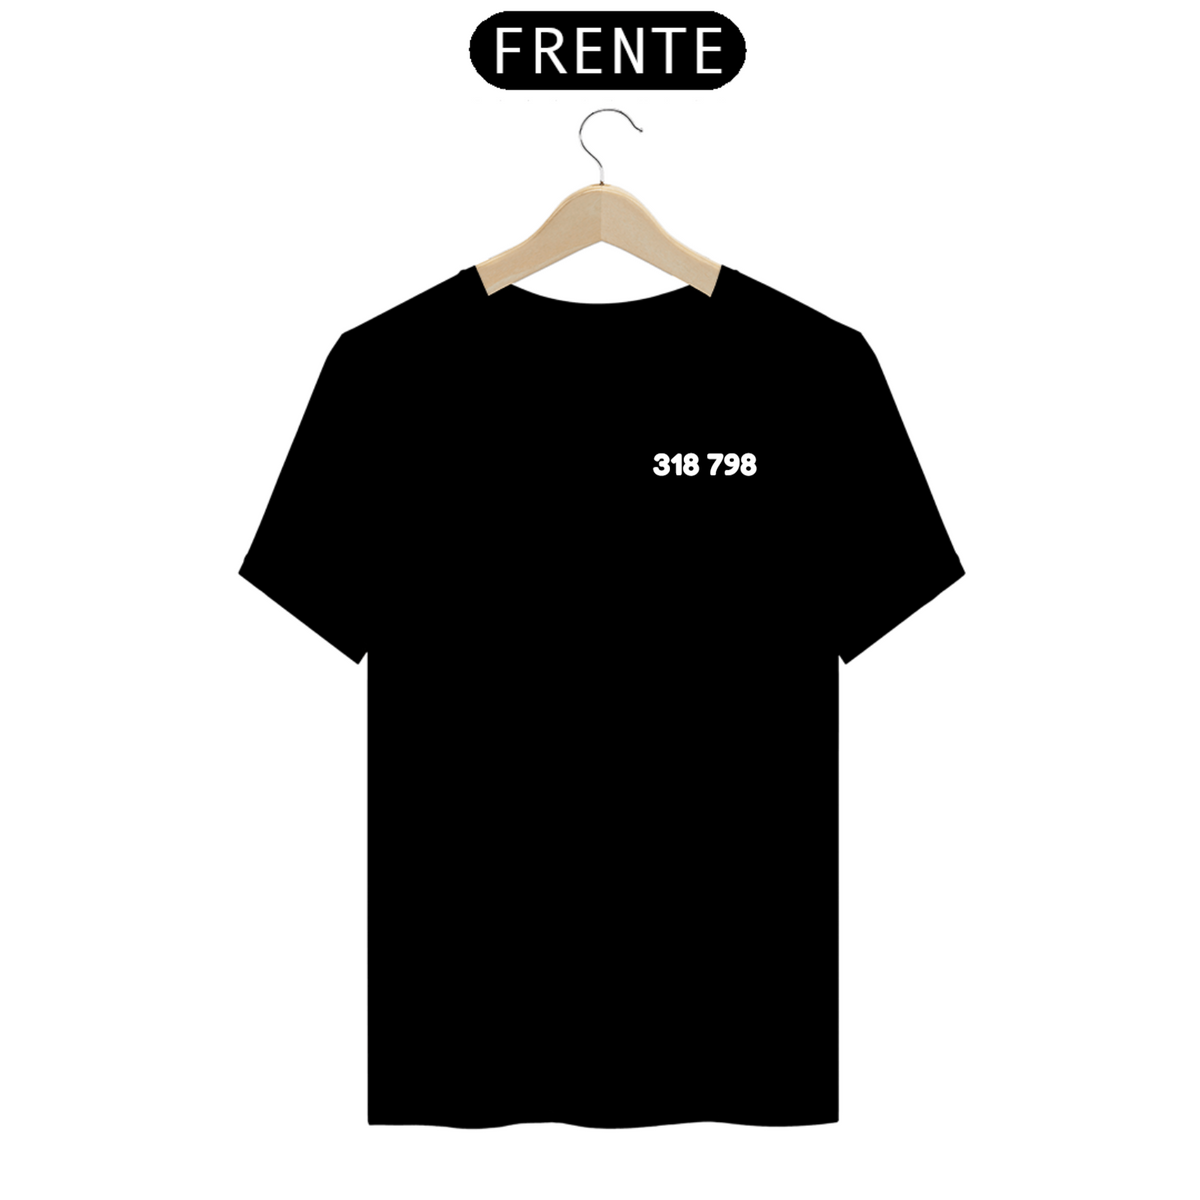 Nome do produto: Camiseta T-Shirt Prime - Códigos Grabovoi: 318 798 - Abundância Financeira